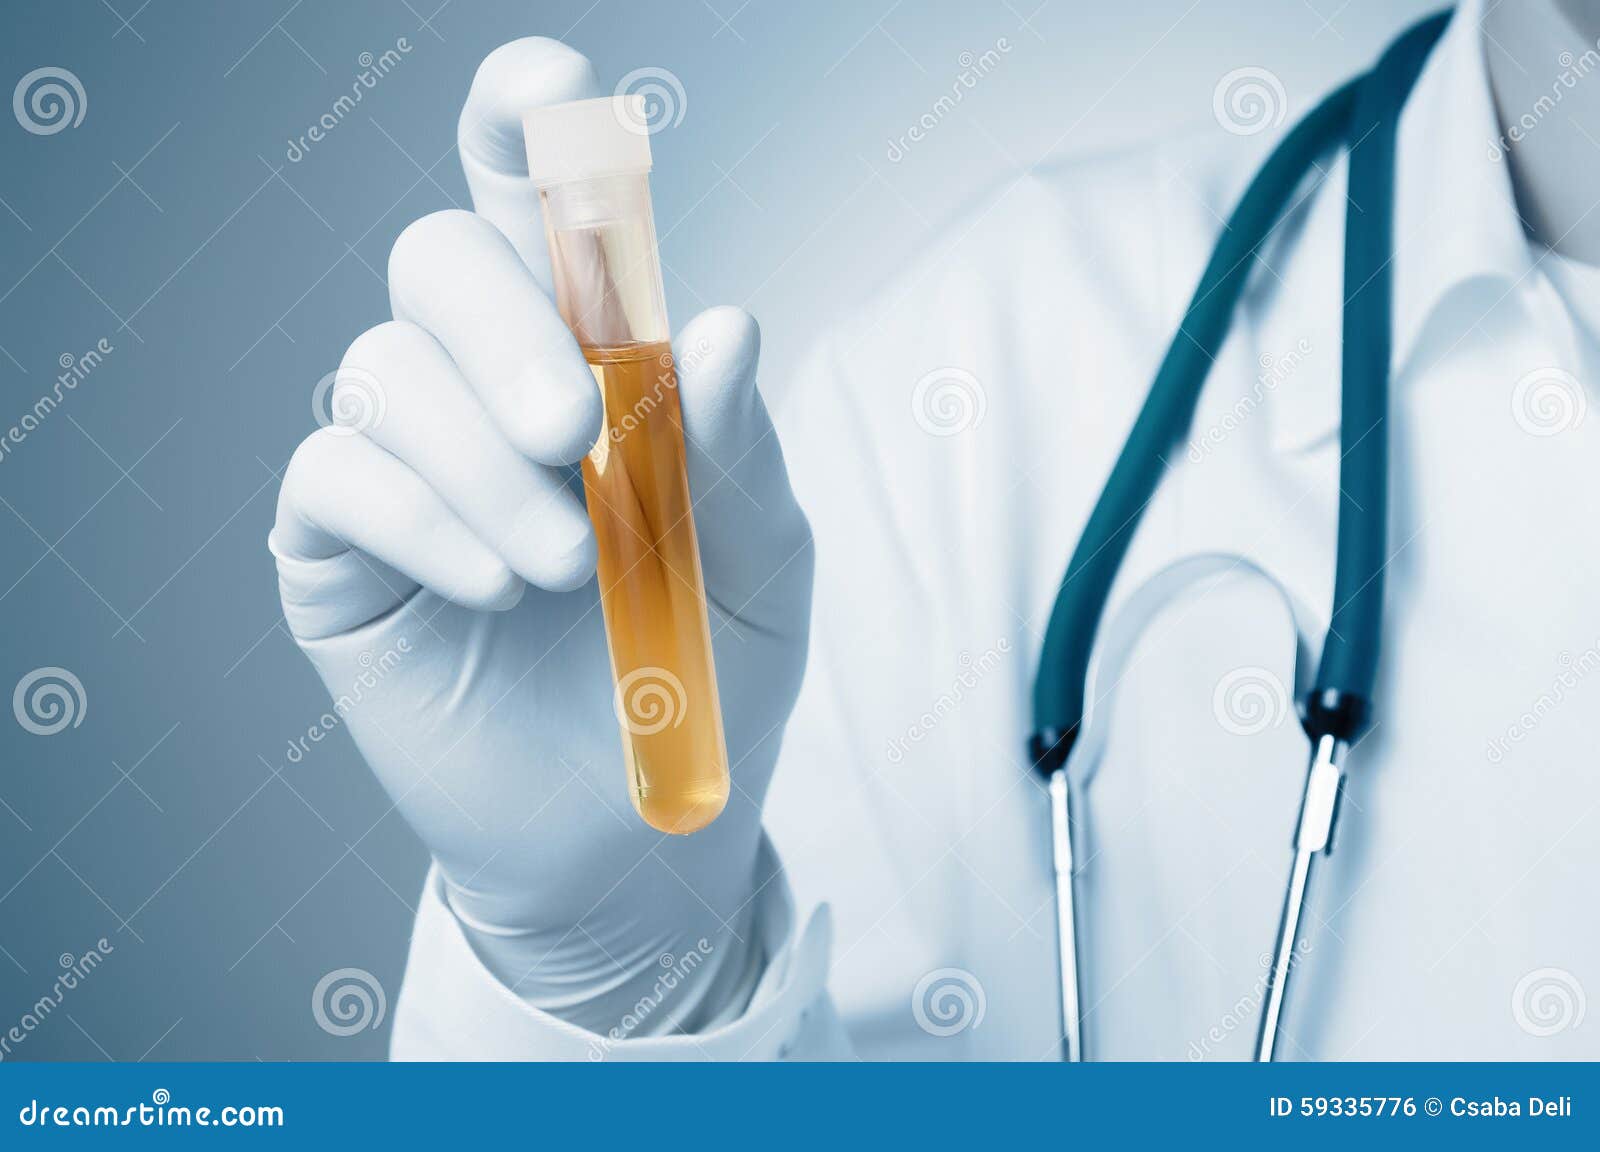 doctor holding urine sample